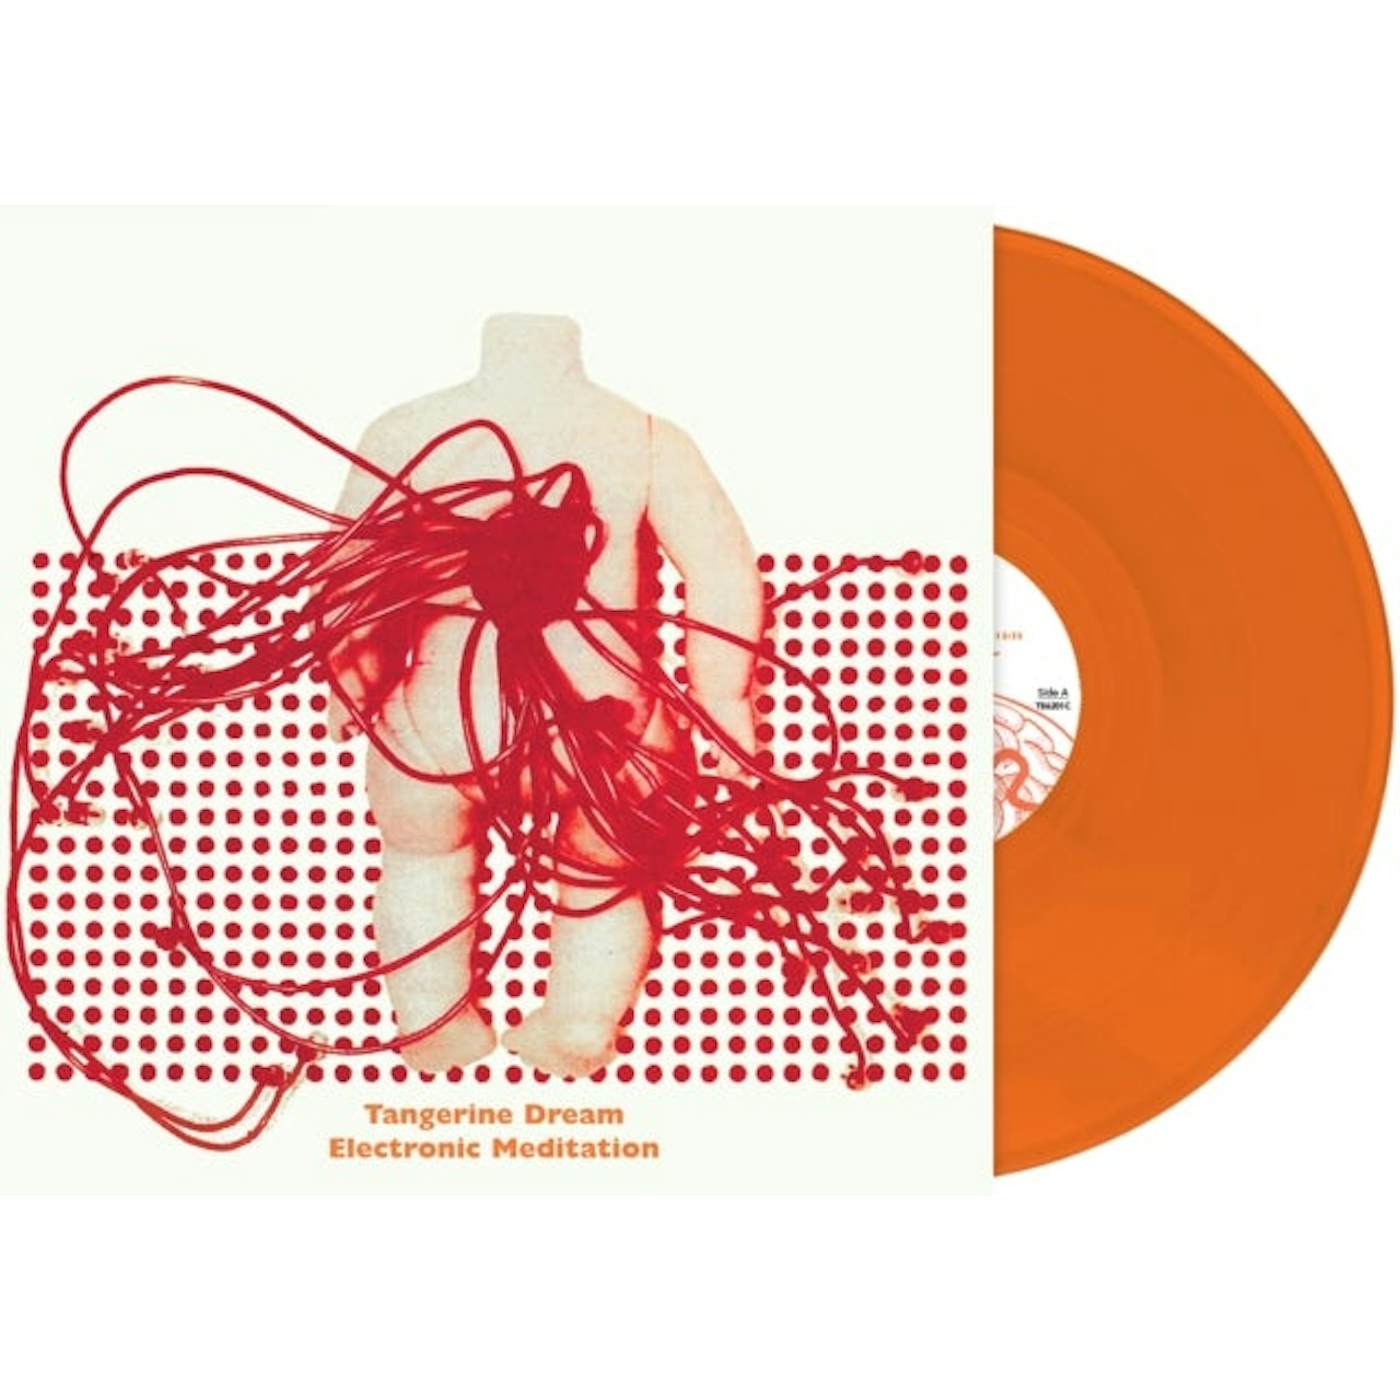 Tangerine Dream LP Vinyl Record - Electronic Meditation (Orange Vinyl)